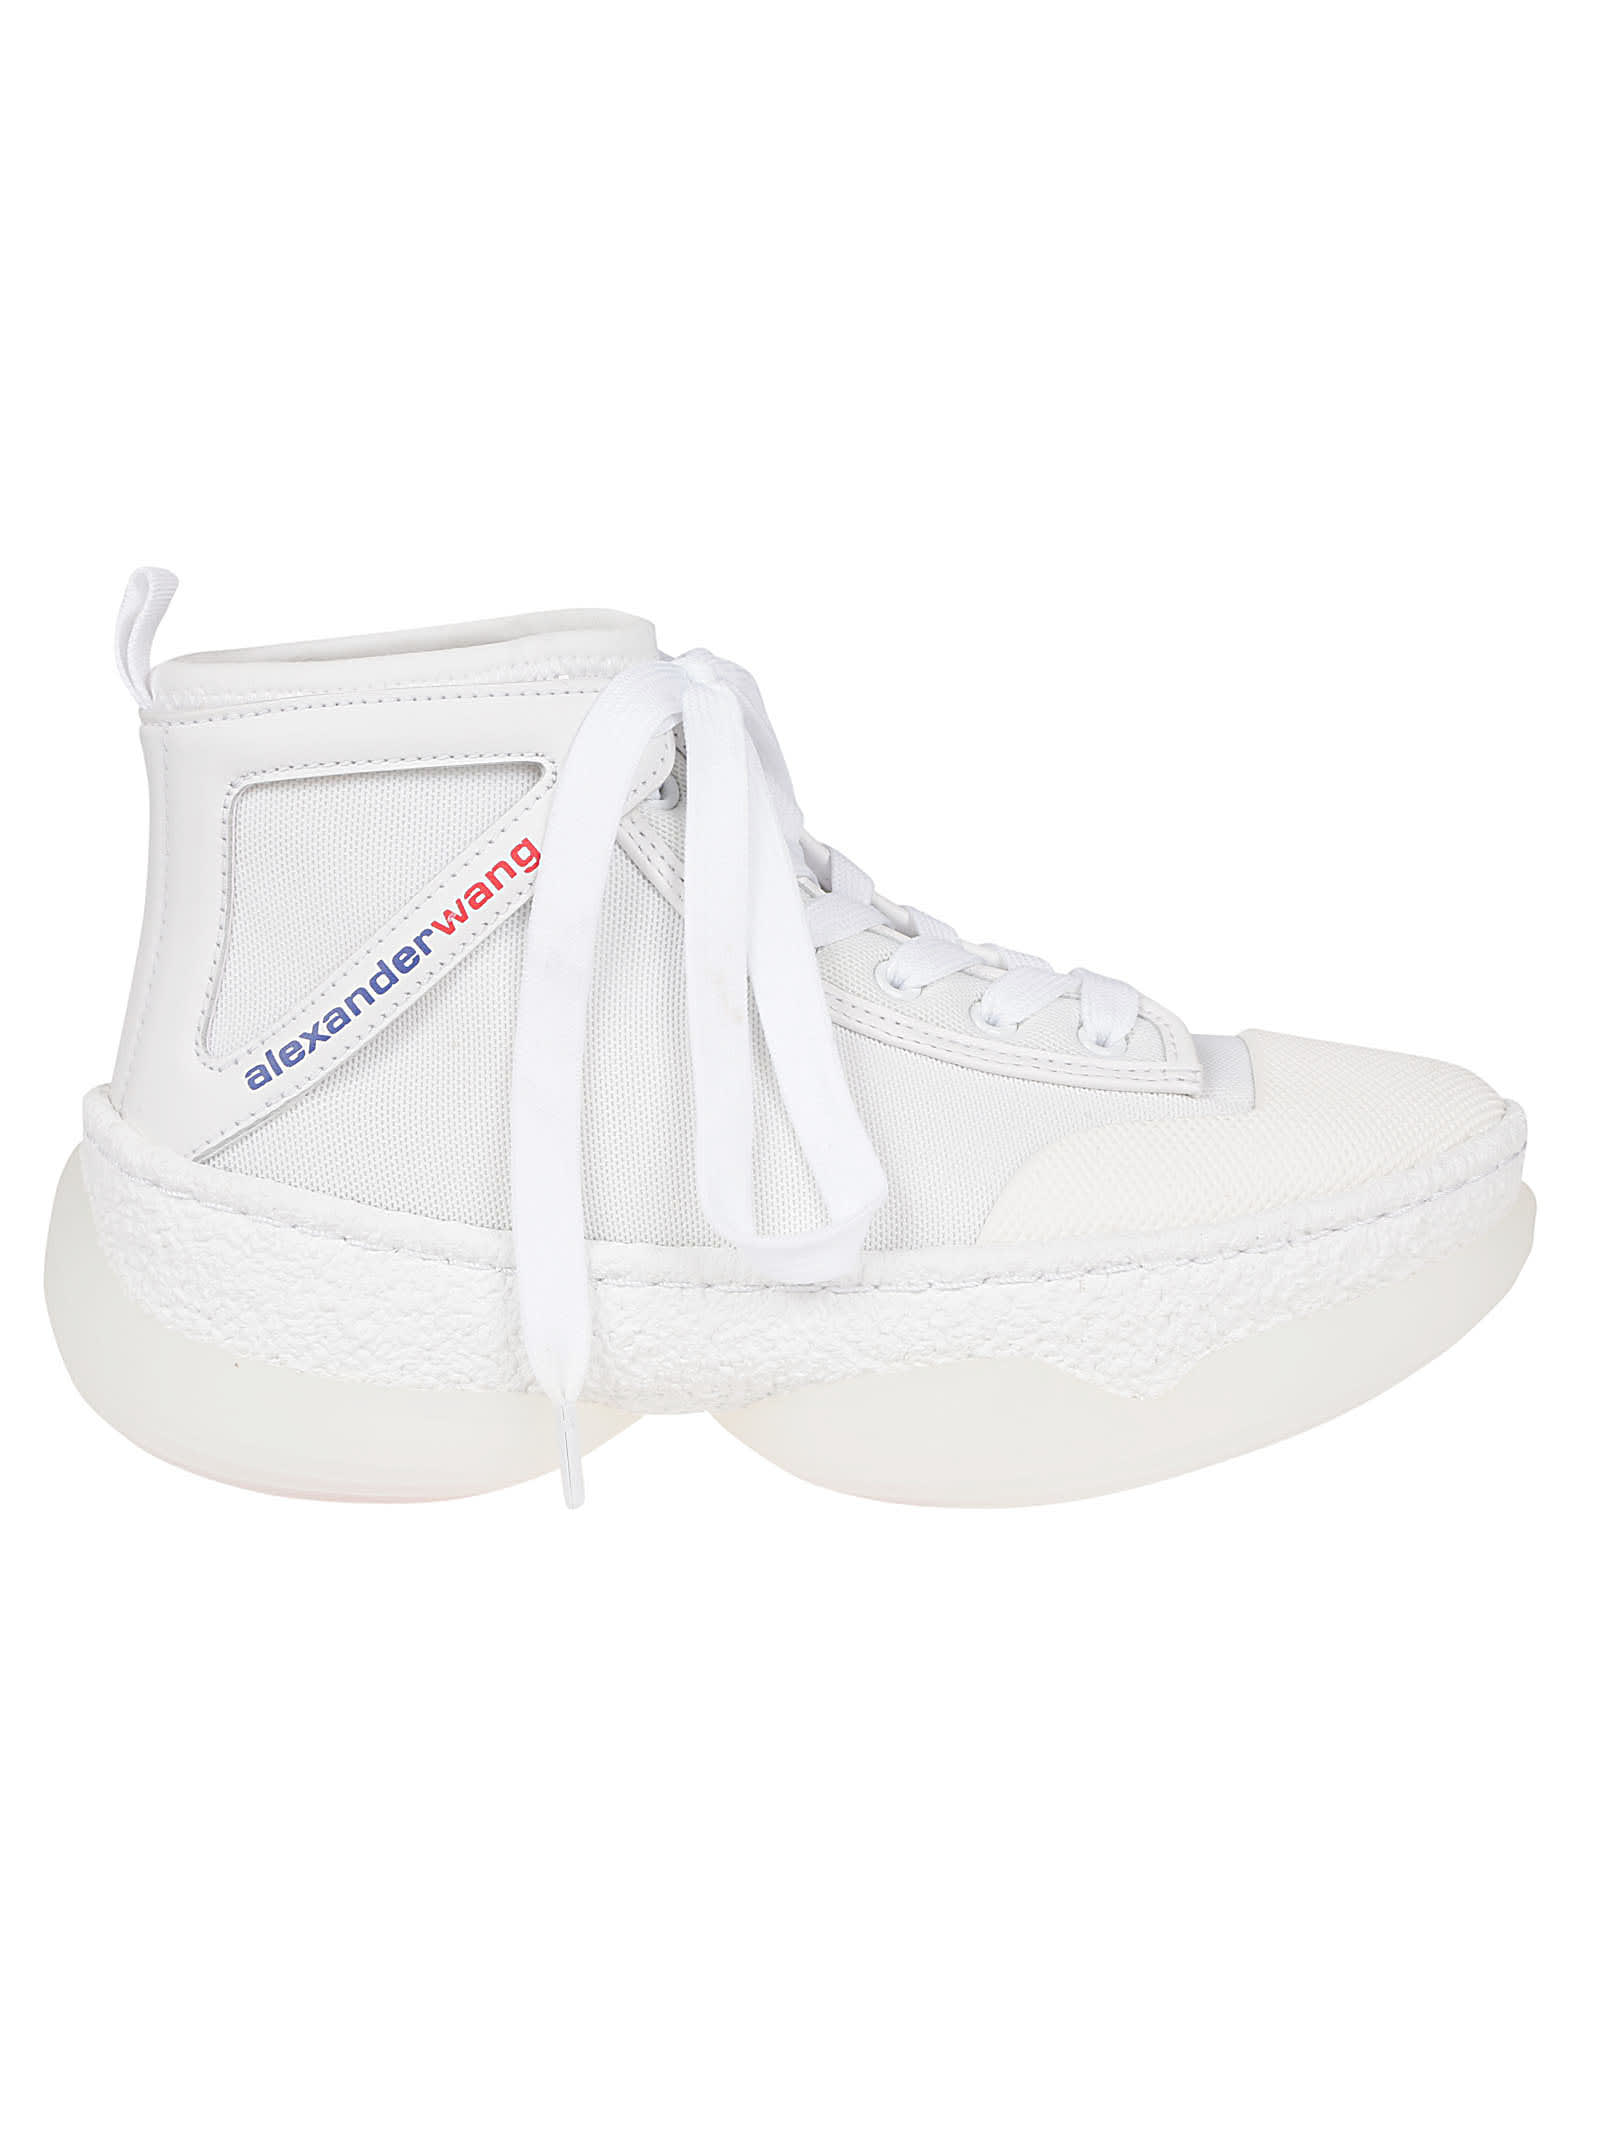 alexander wang white sneakers